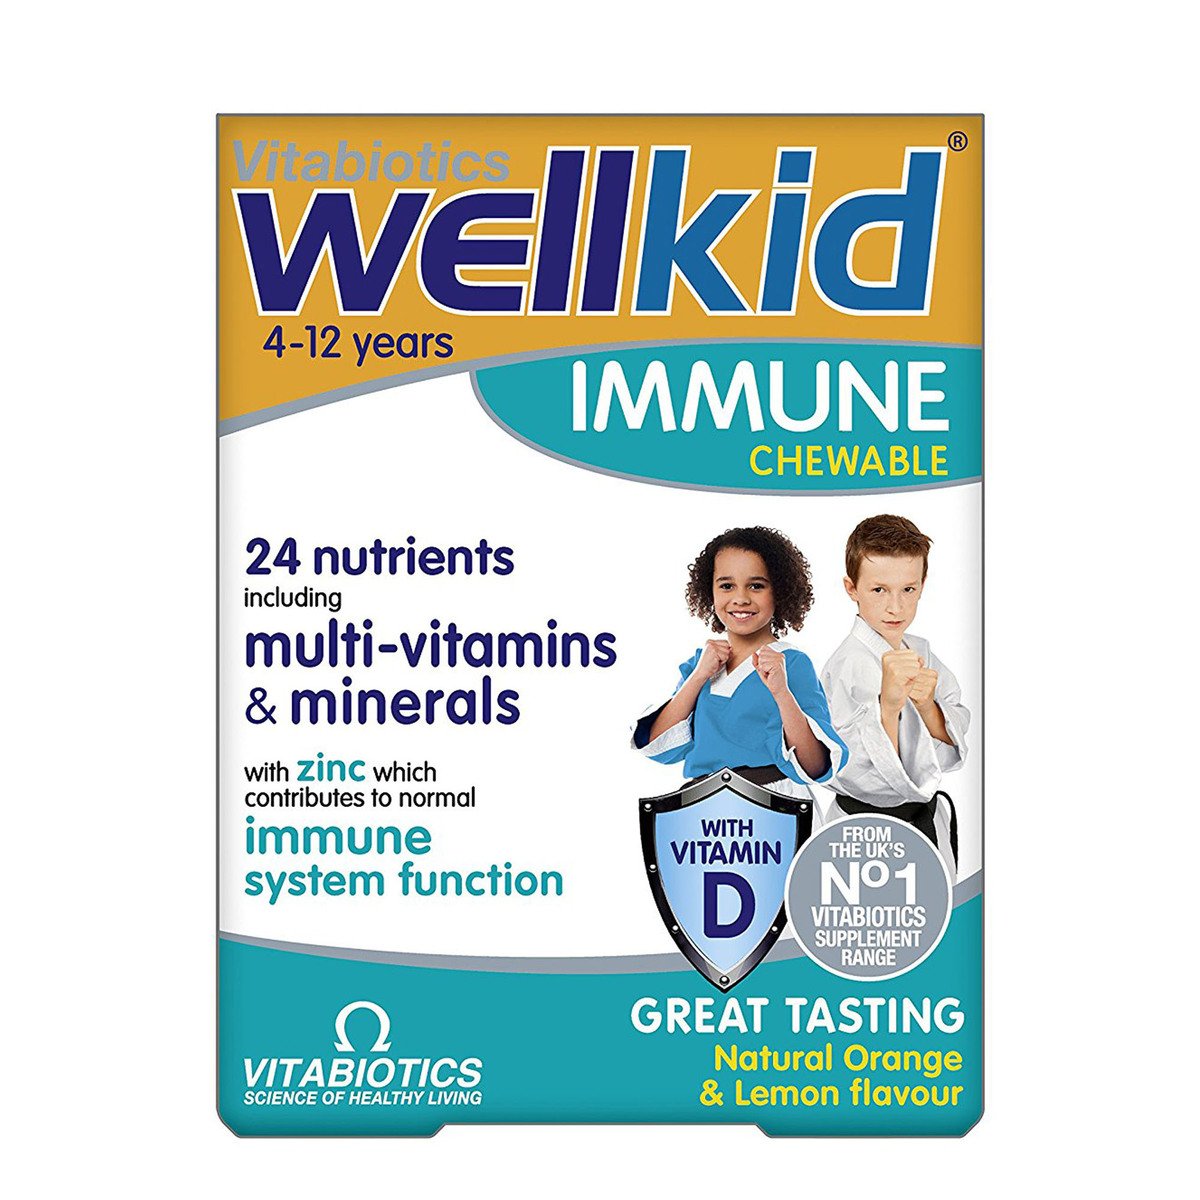 Vitabiotics Wellkid Immune Chewable For 4-12 Years Old 30 pcs